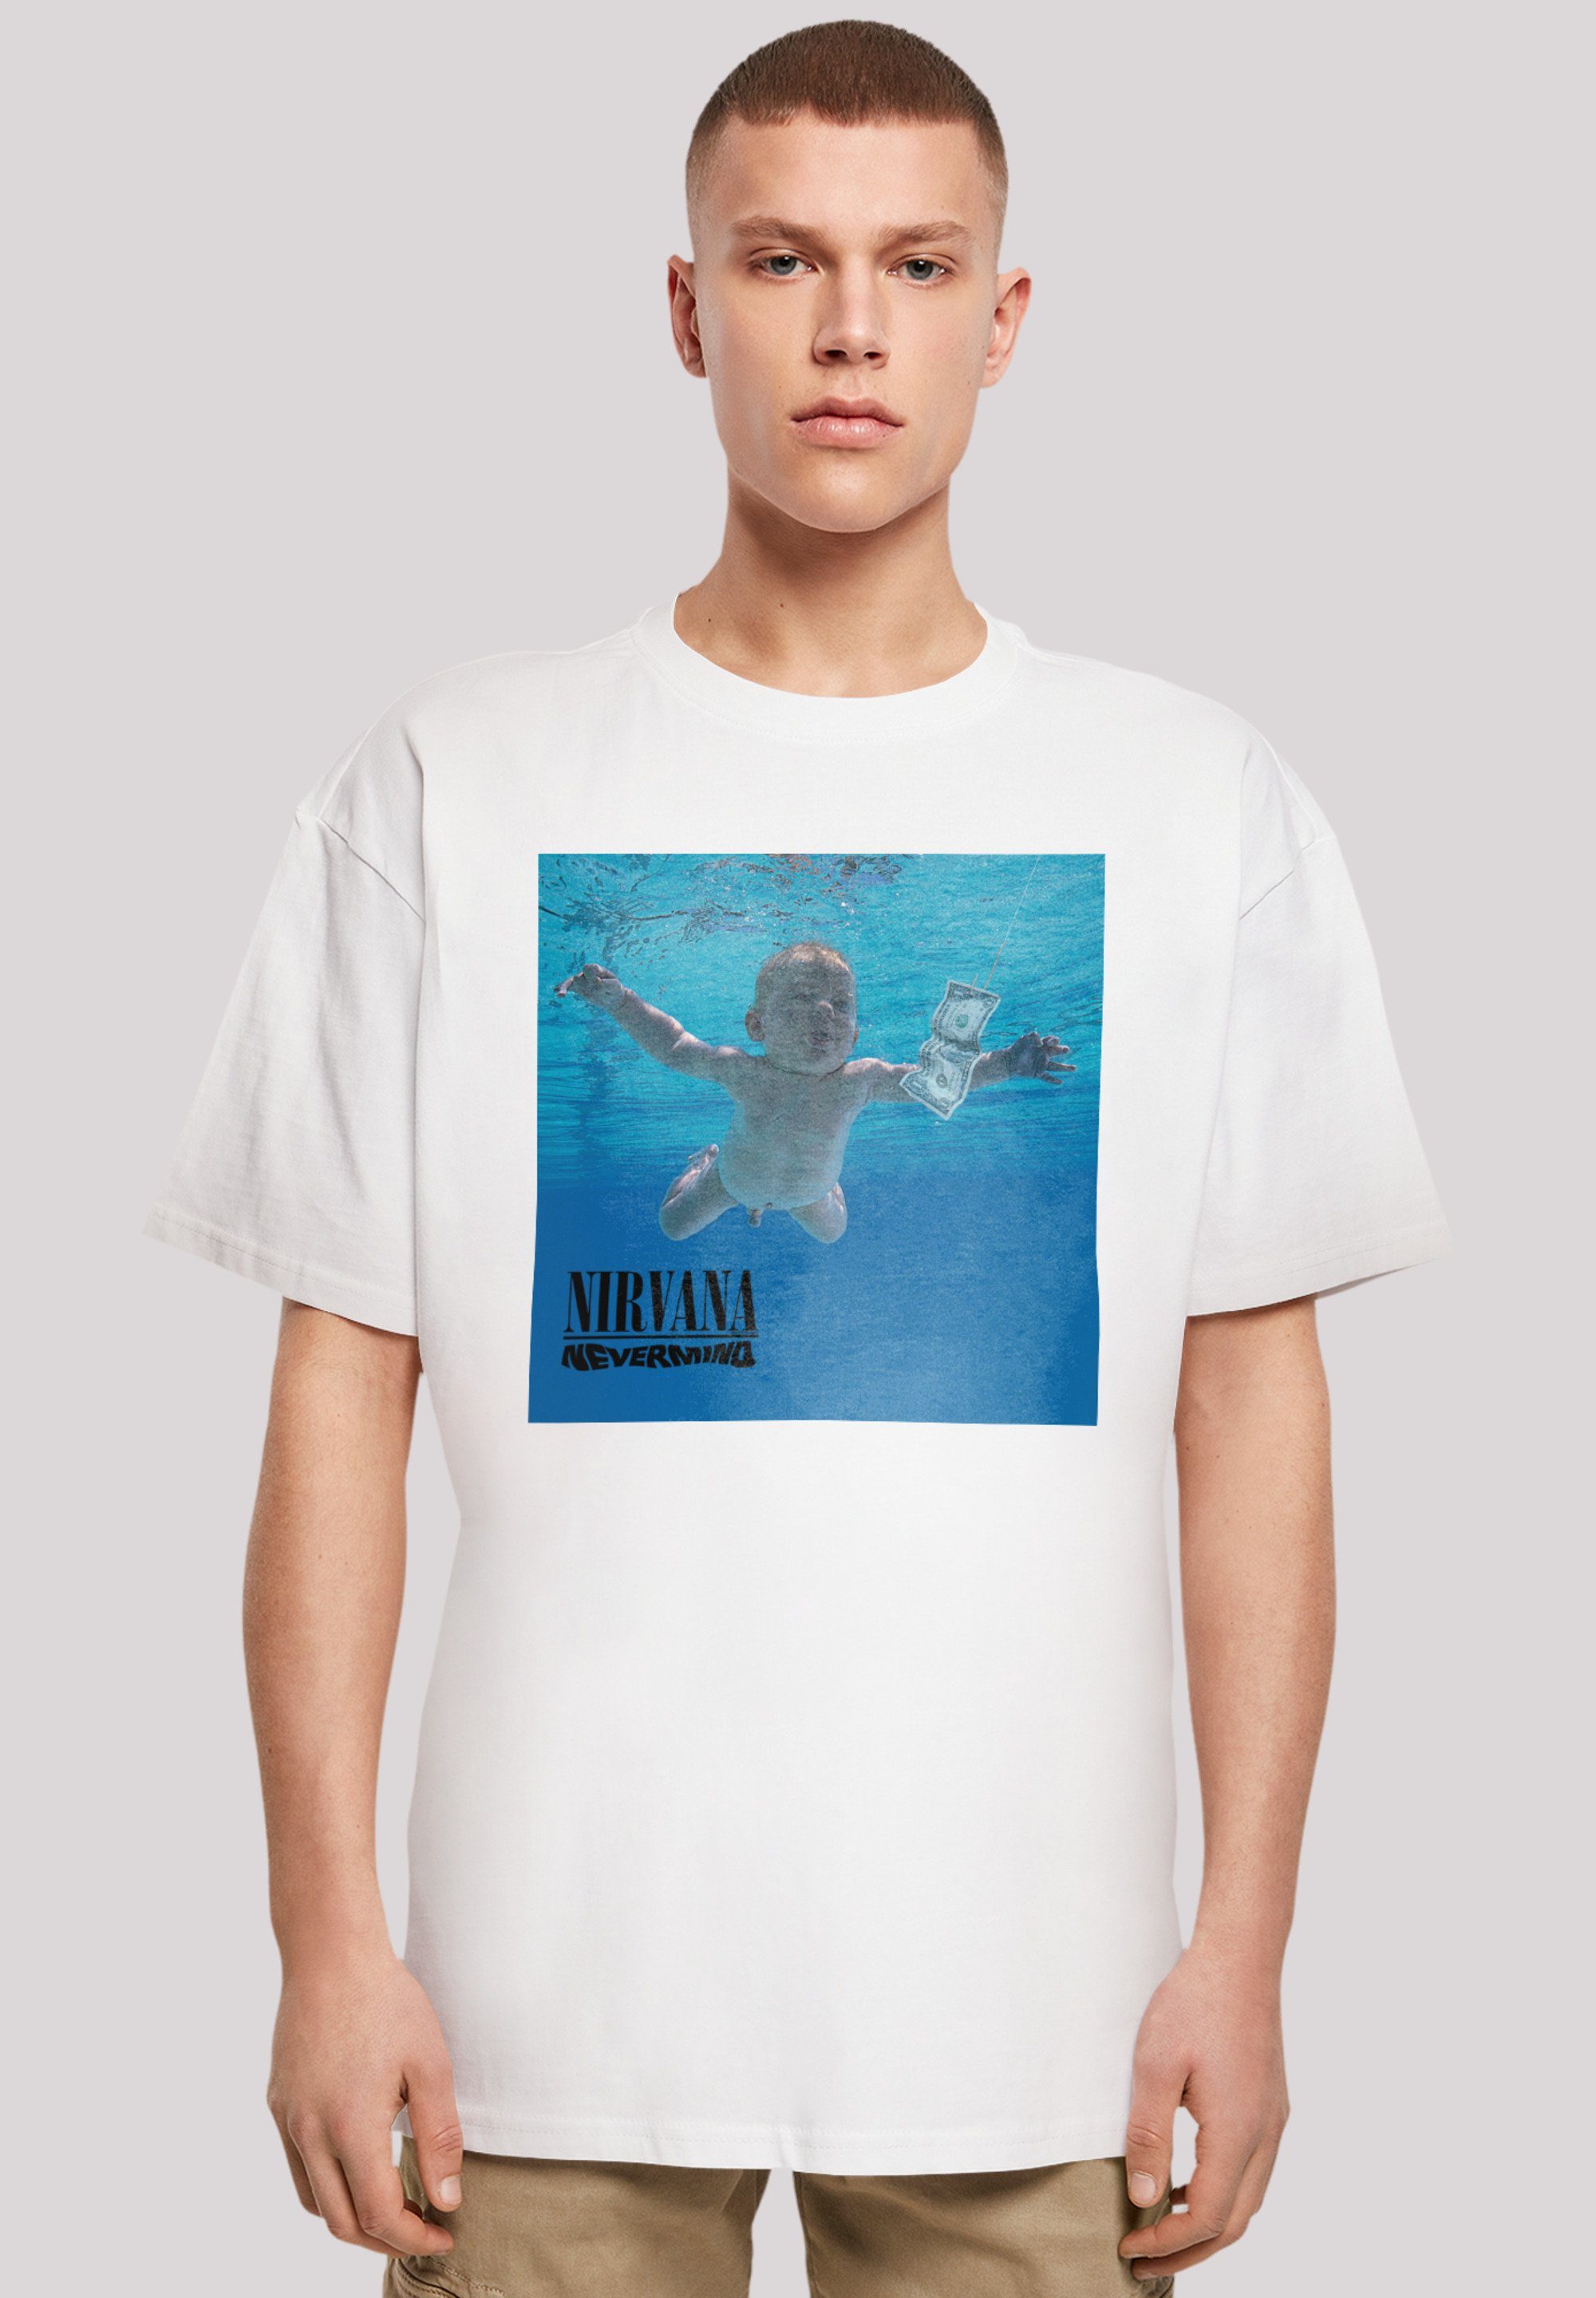 F4NT4STIC T-Shirt Nirvana Rock Band Nevermind Album Premium Qualität weiß